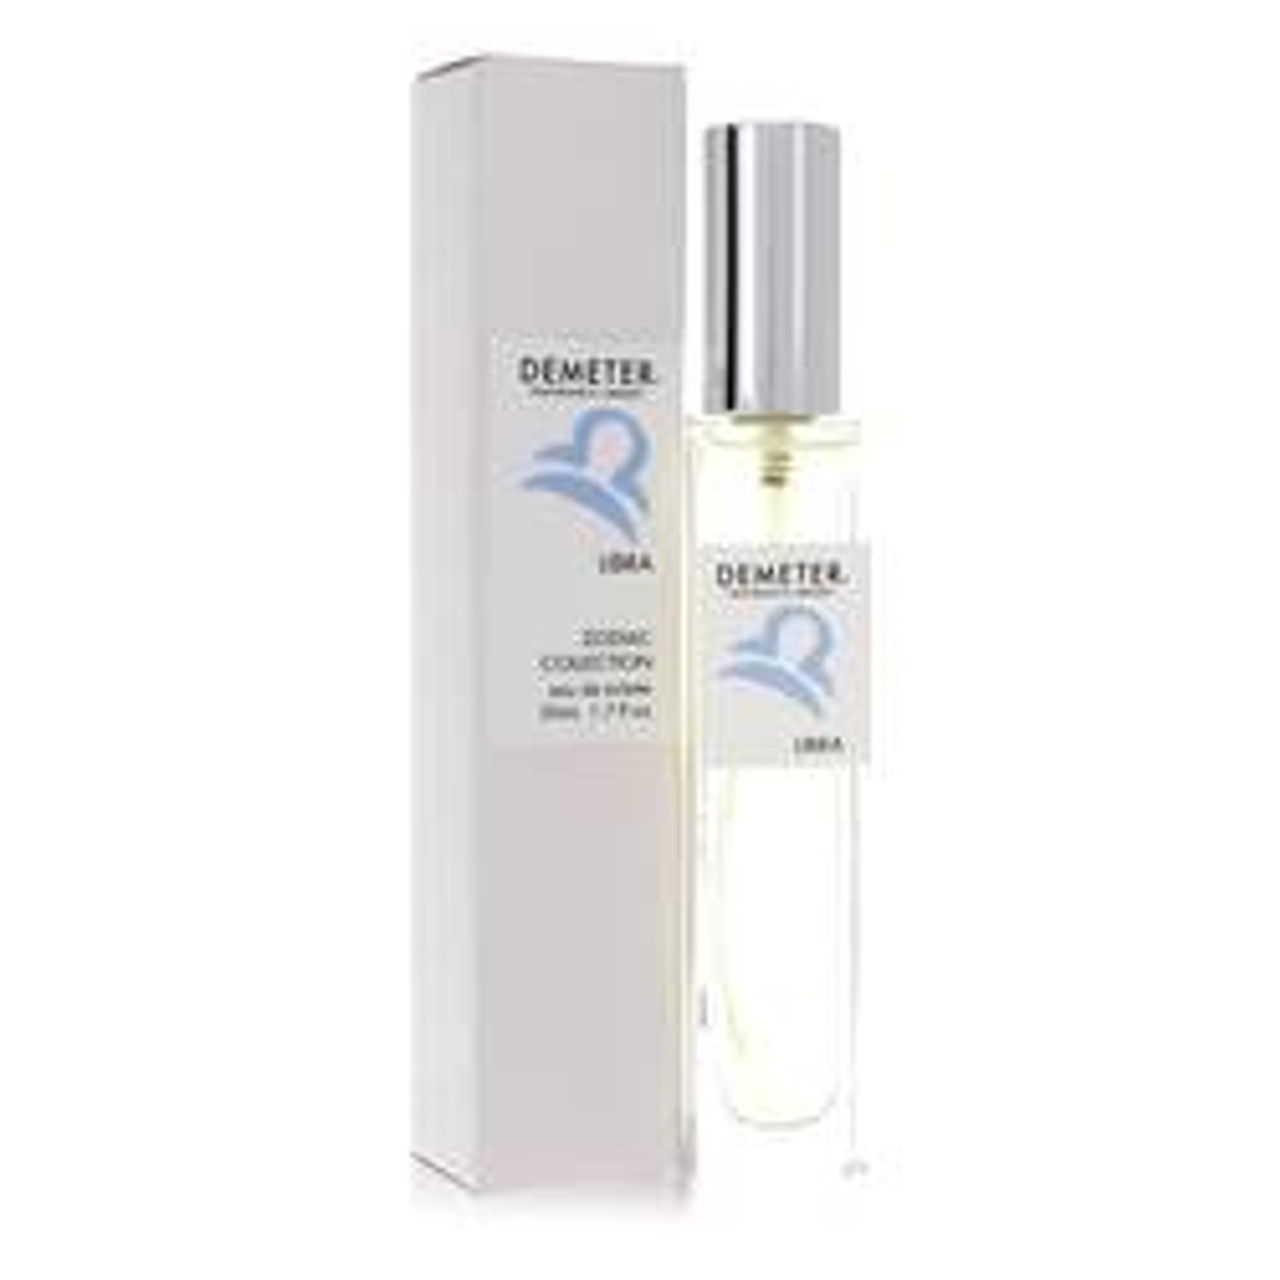 Demeter Libra Perfume By Demeter Eau De Toilette Spray 1.7 oz for Women - [From 63.00 - Choose pk Qty ] - *Ships from Miami